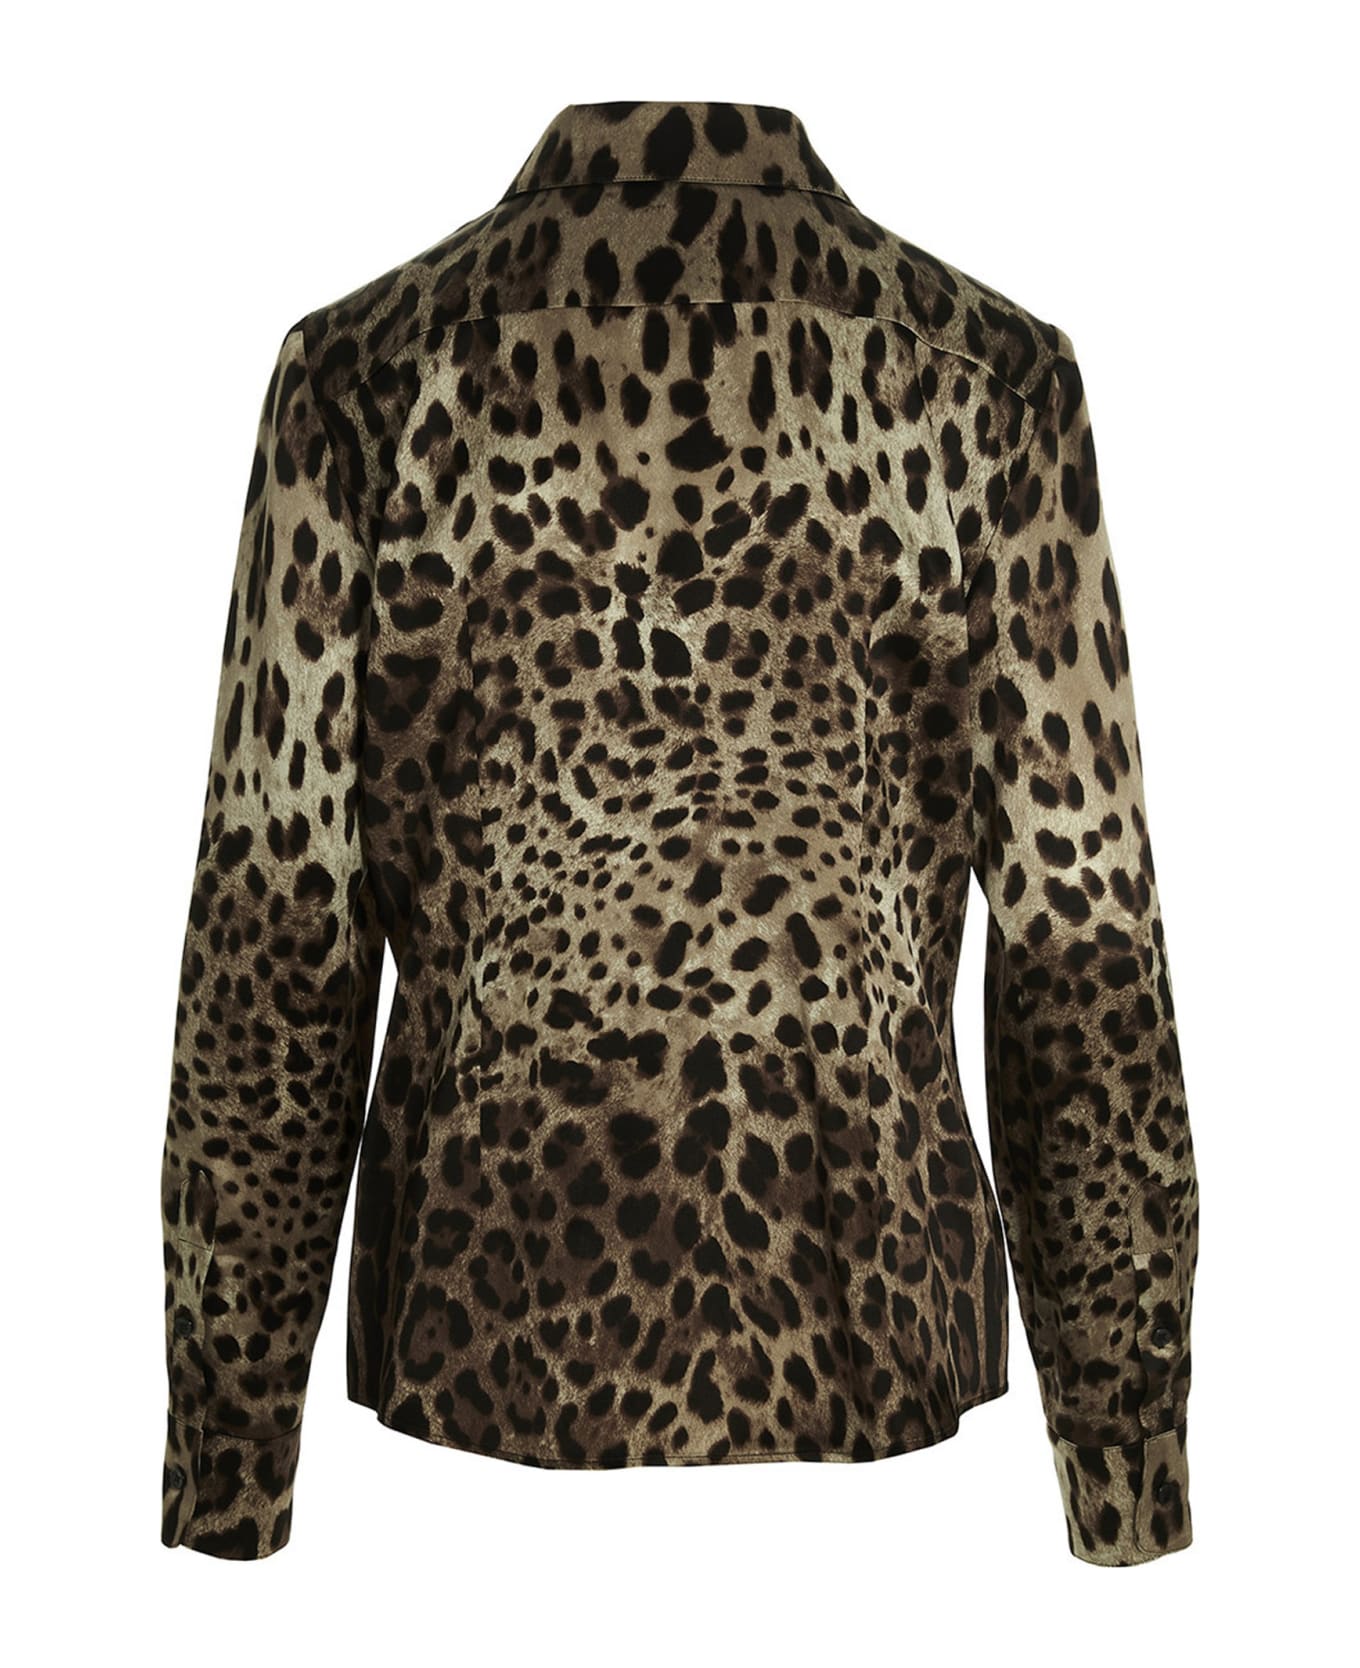 Dolce & Gabbana Animal Print Shirt - Brown